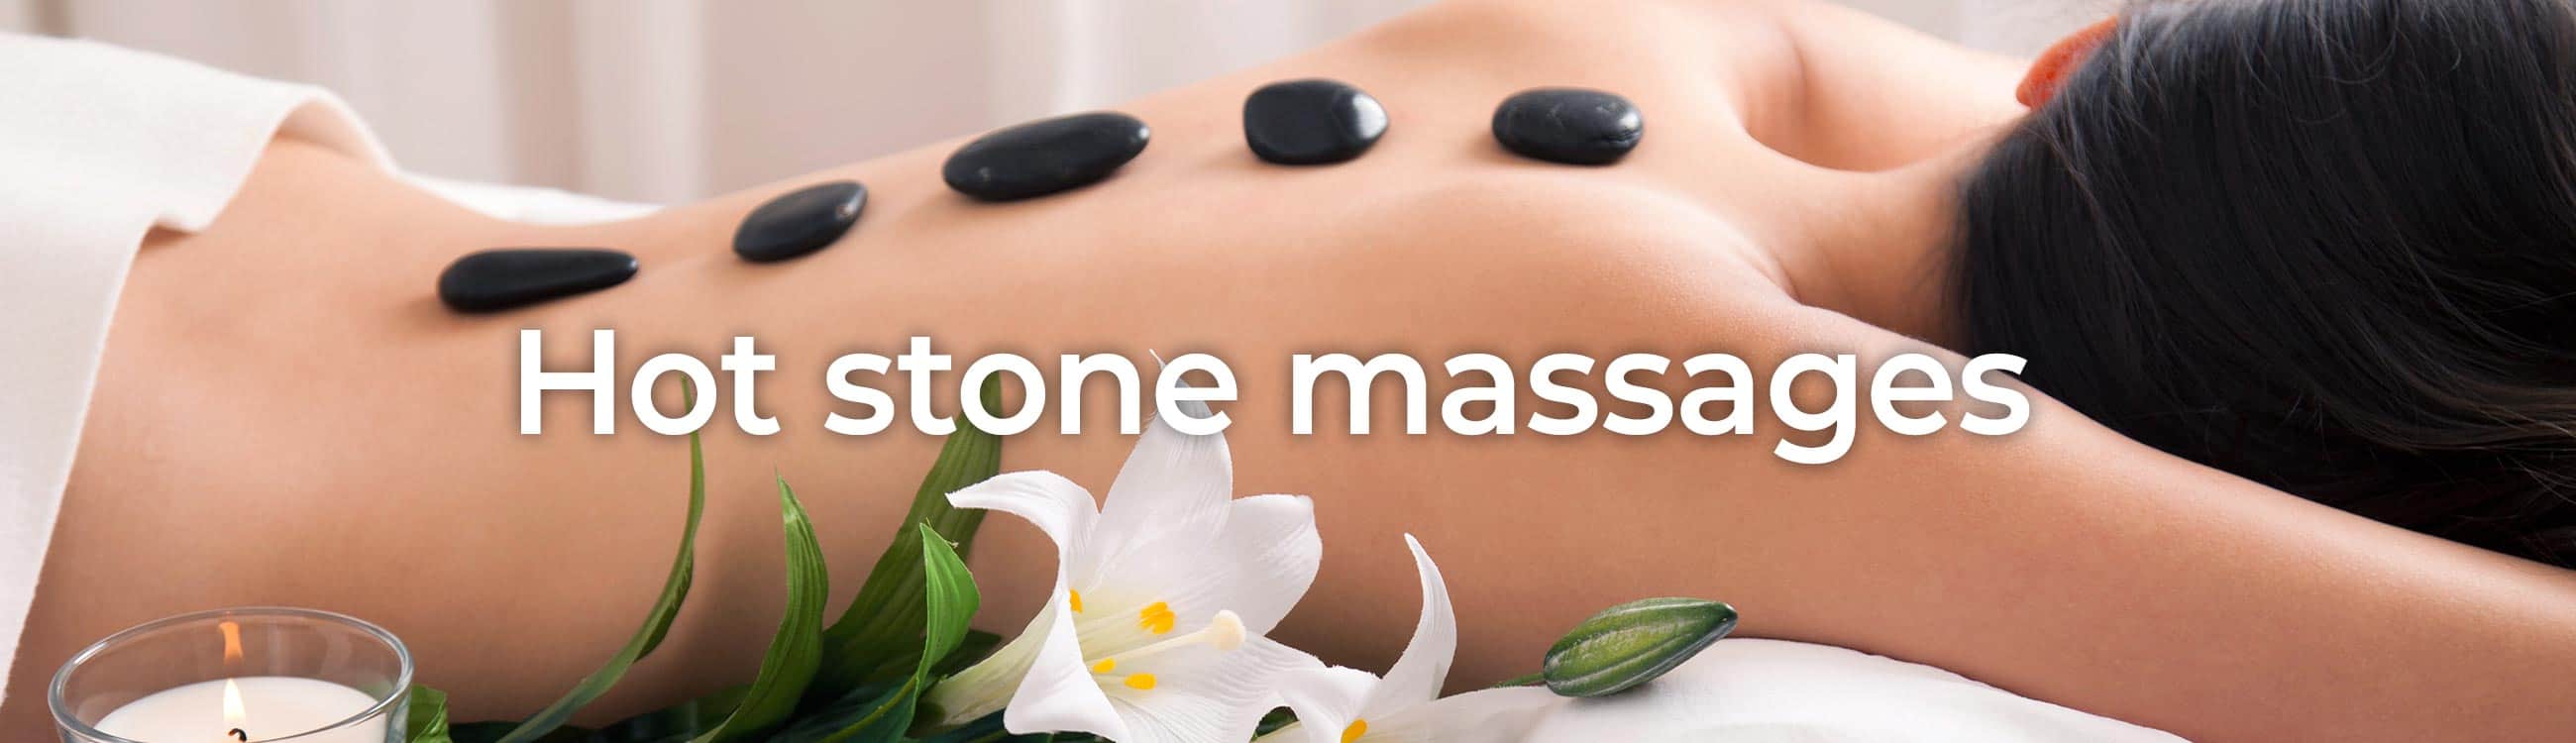 Hot stone massages